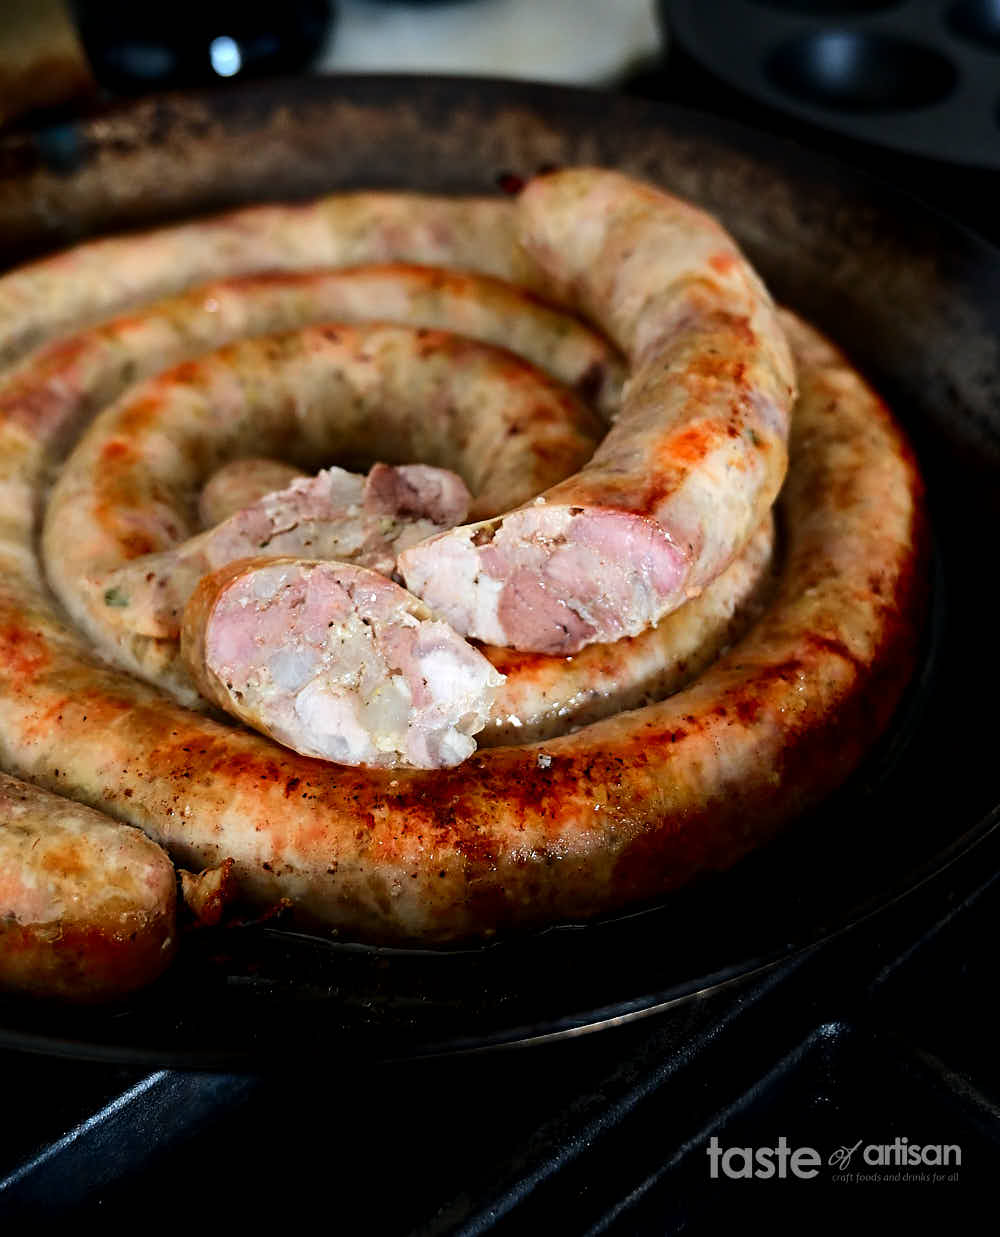 Ukrainian sausage, traditionally made with garlic, pepper, salt and bay leaf